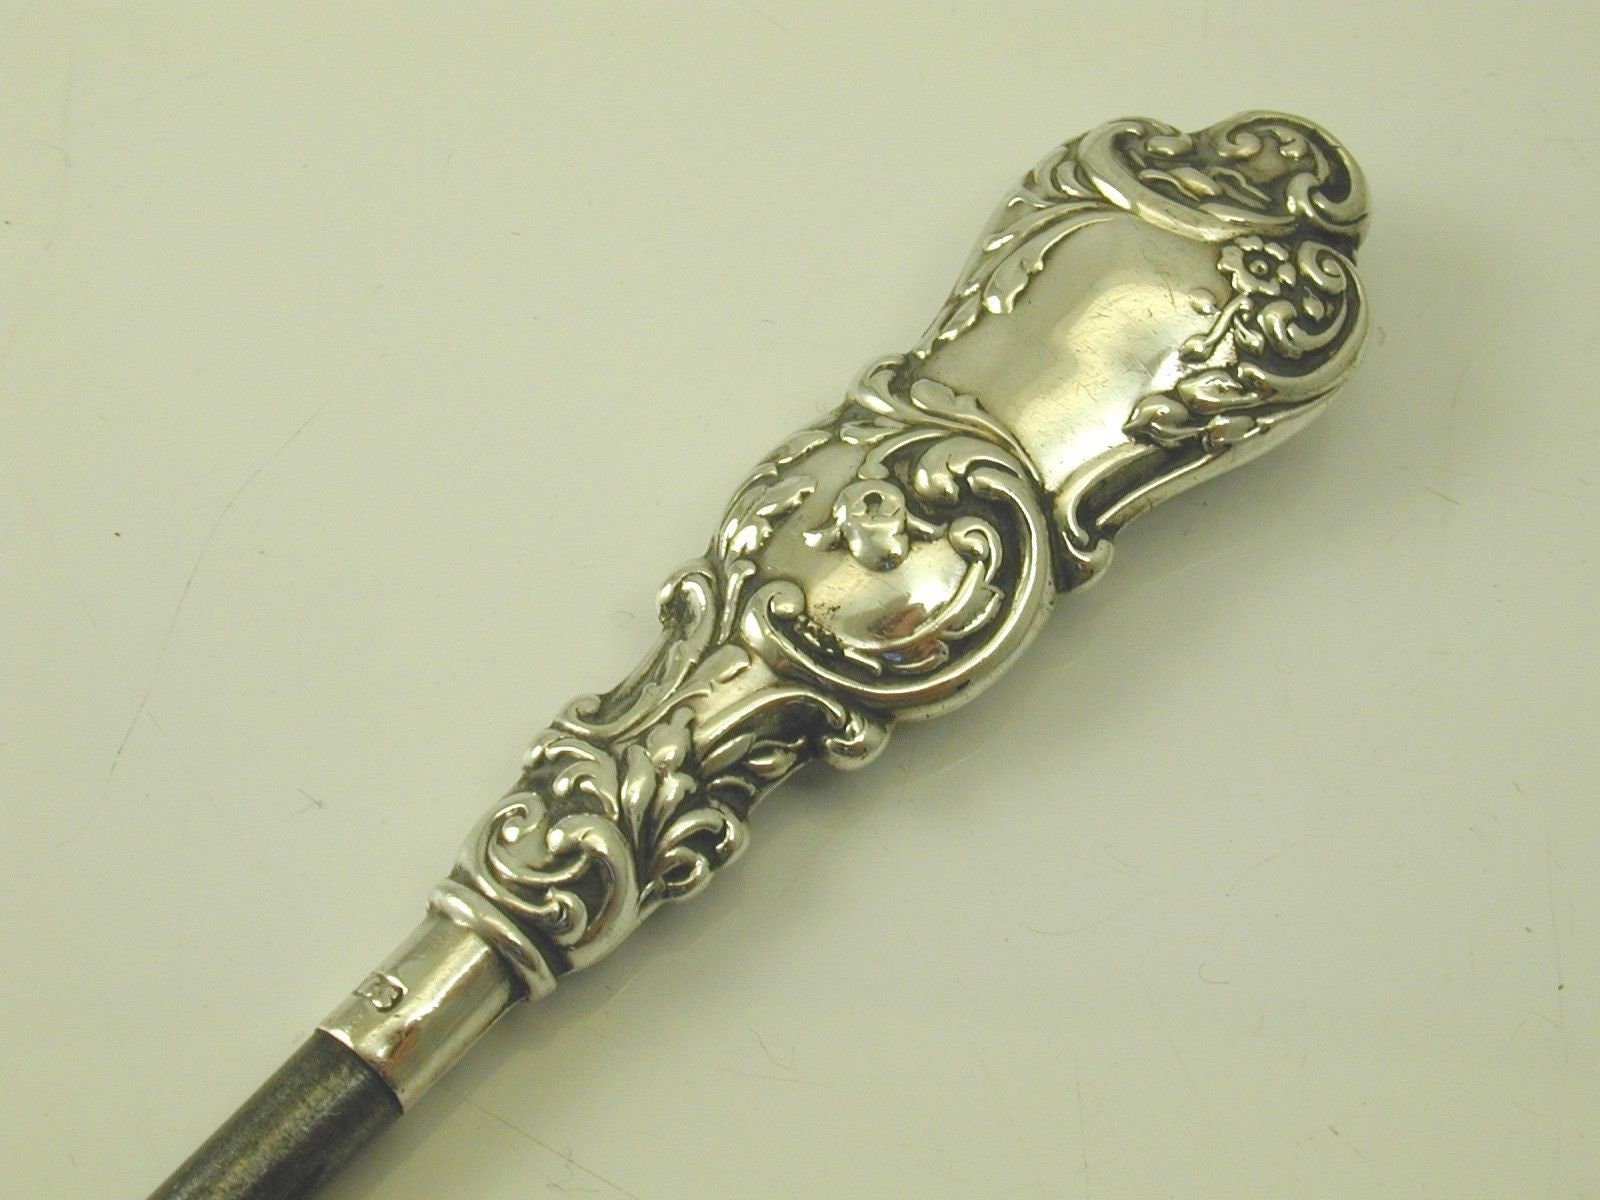 Vintage sterling silver handle button hook with Greek Key design